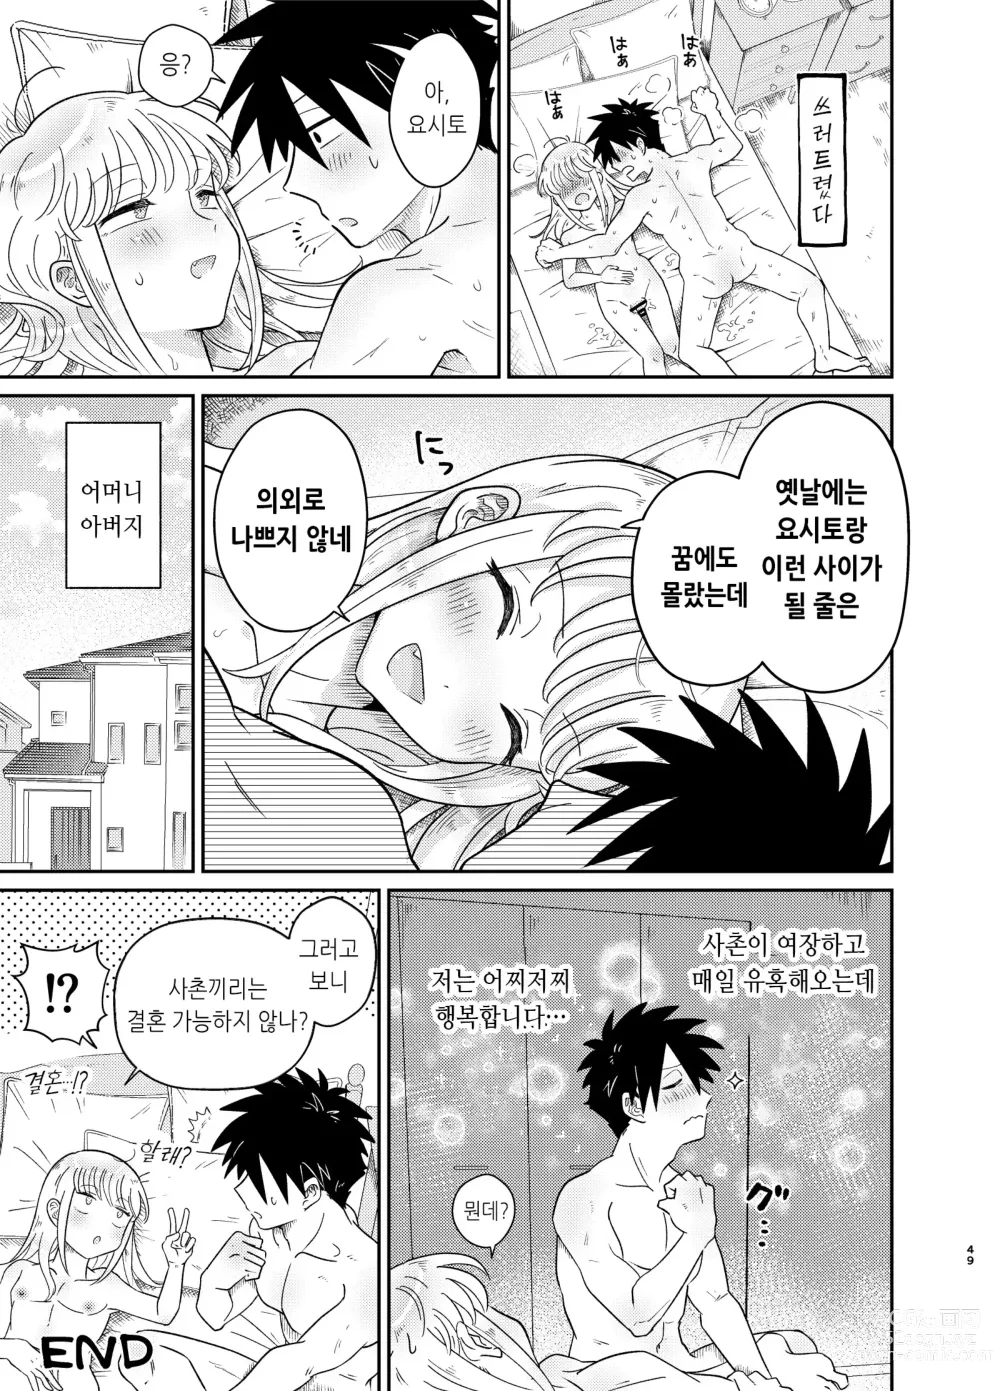 Page 49 of doujinshi 엄청 귀엽고 야한 사촌은 좋아하세요?